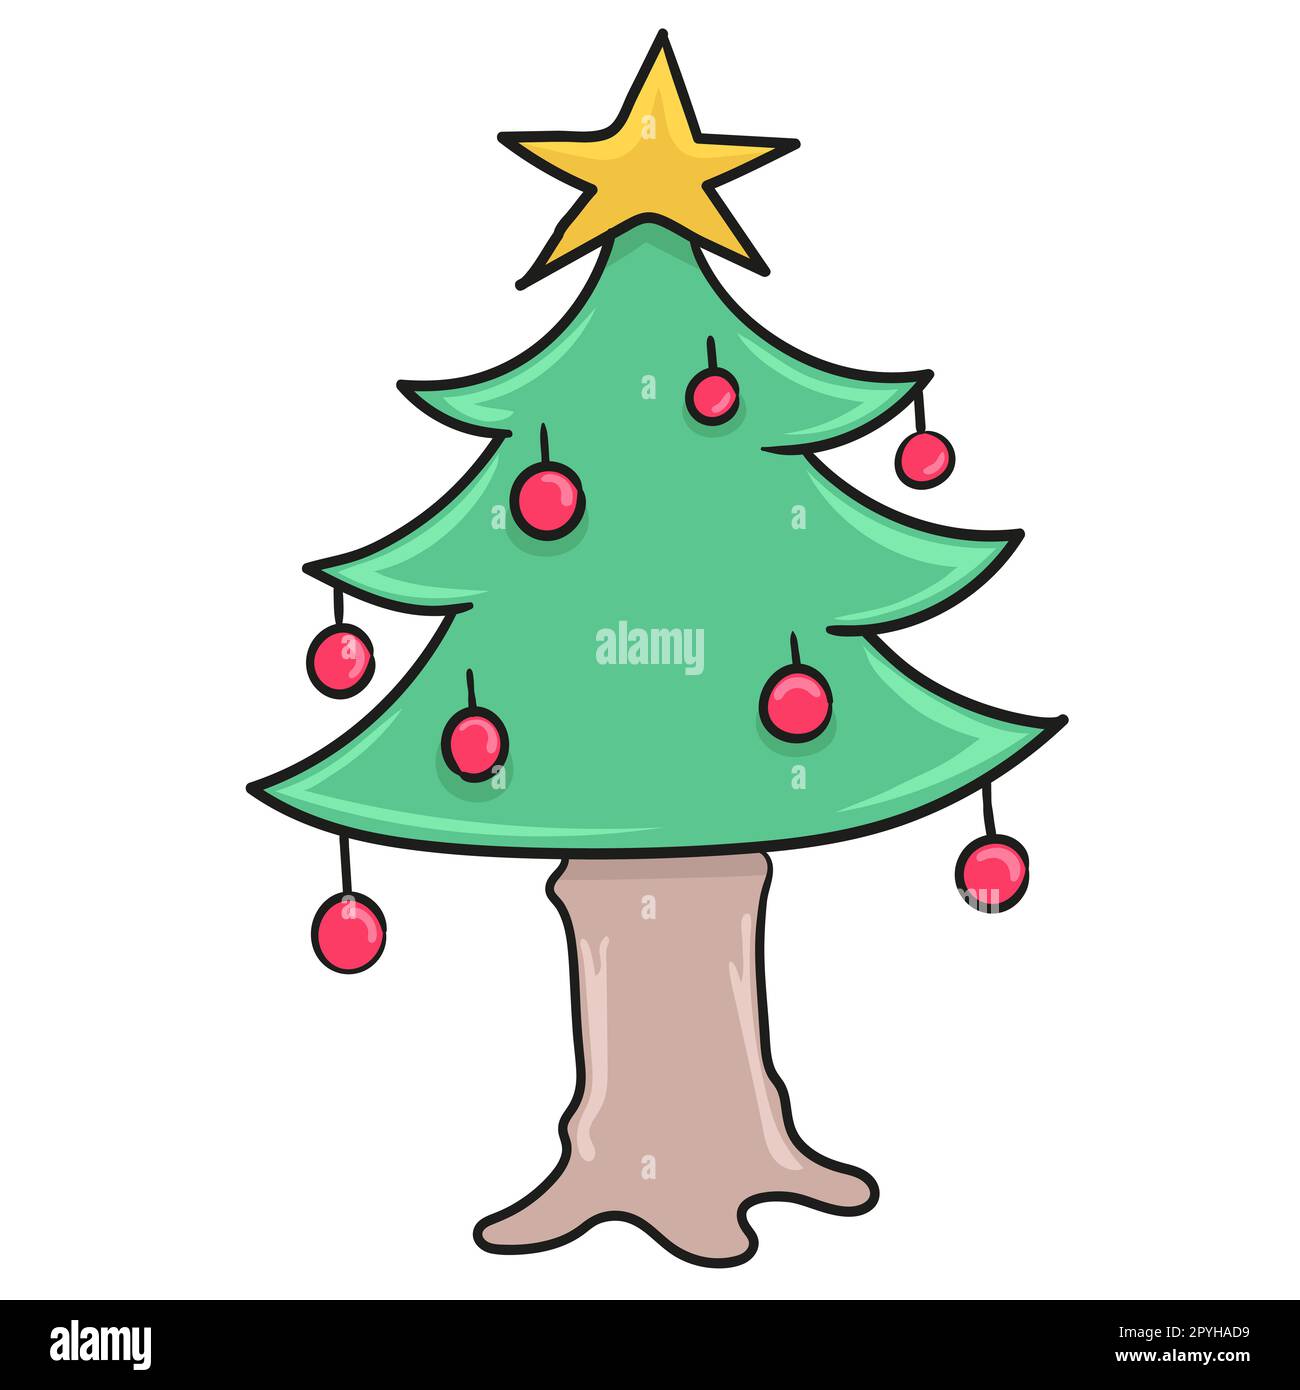 Christmas tree full of decorations. doodle icon image Stock Photo